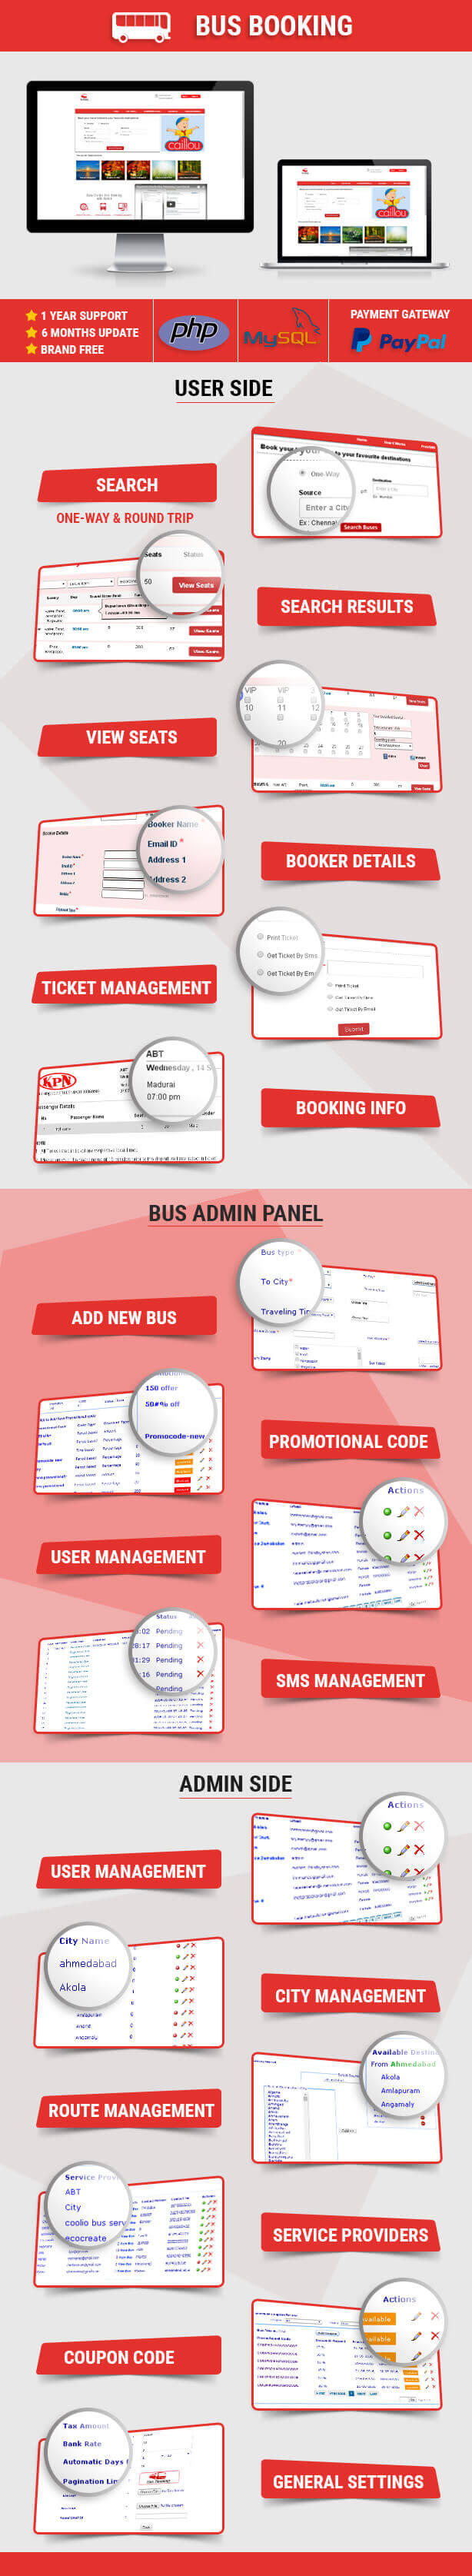 Online Bus Booking App Features